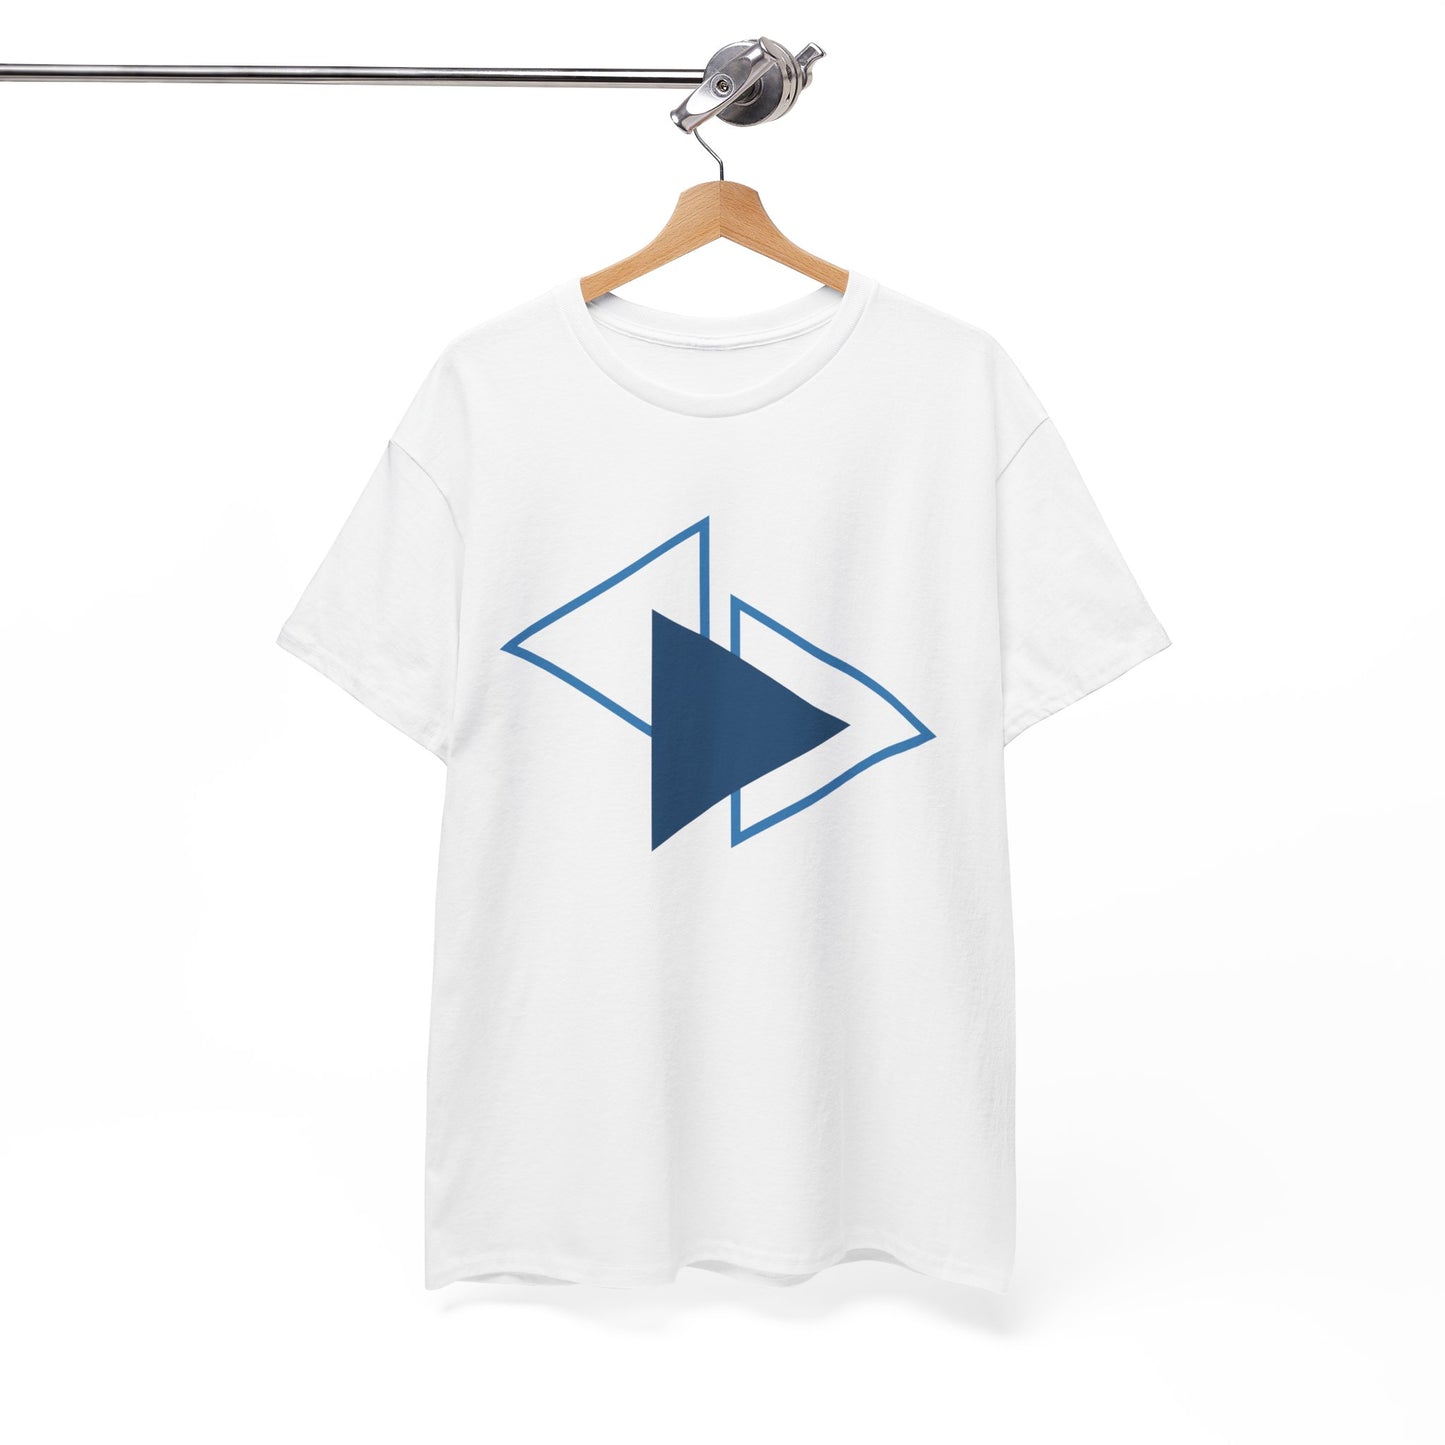 Unisex Heavy Cotton Graphic Design T-shirt